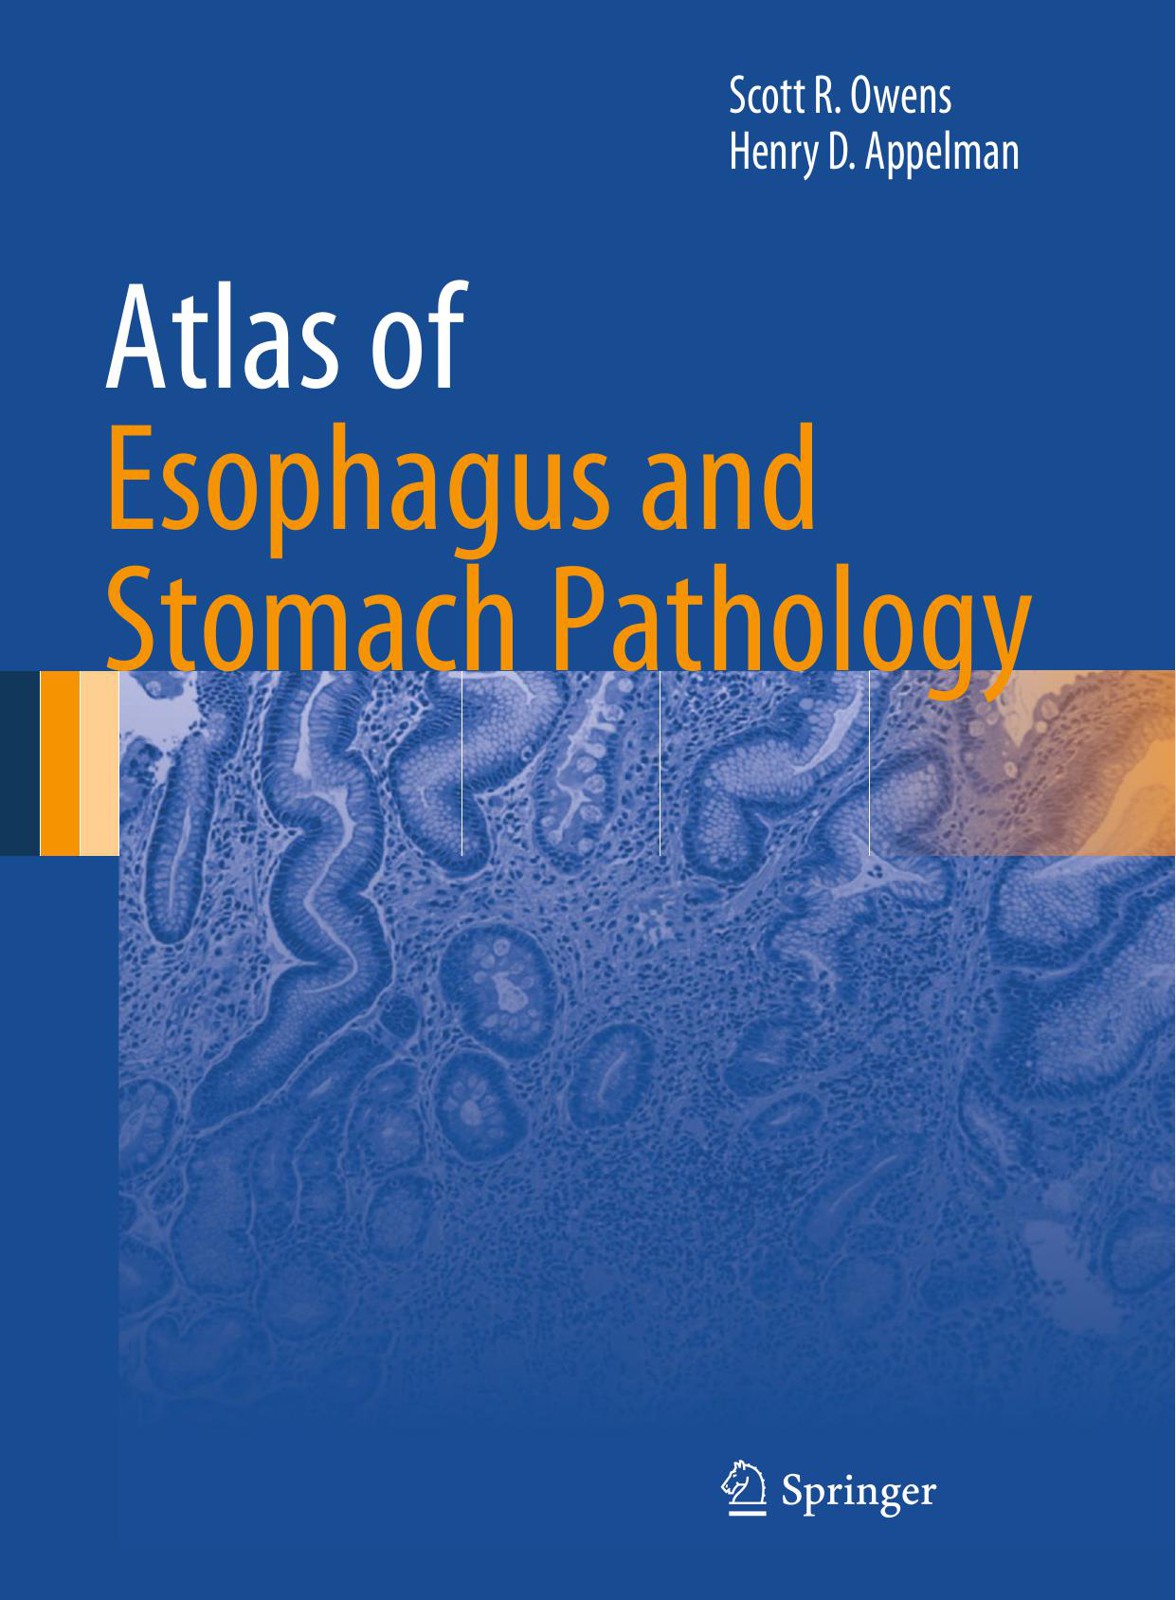 Atlas of Esophagus and Stomach Pathology PDF